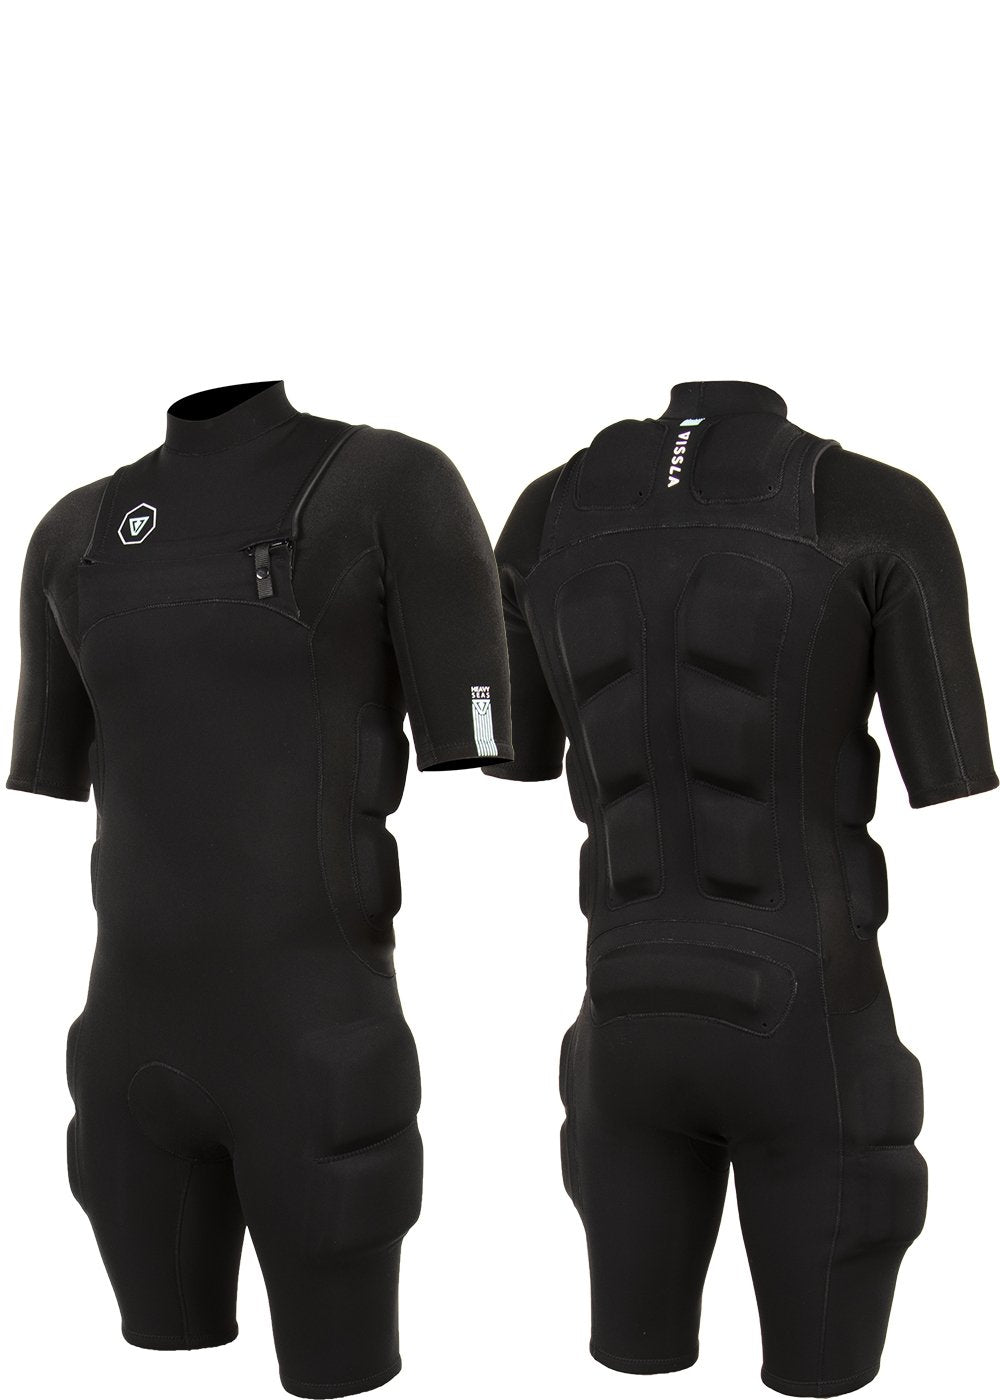 Vissla Men's Black Heavy Seas Impact 2-2 Spring Suit. Front and Back View.